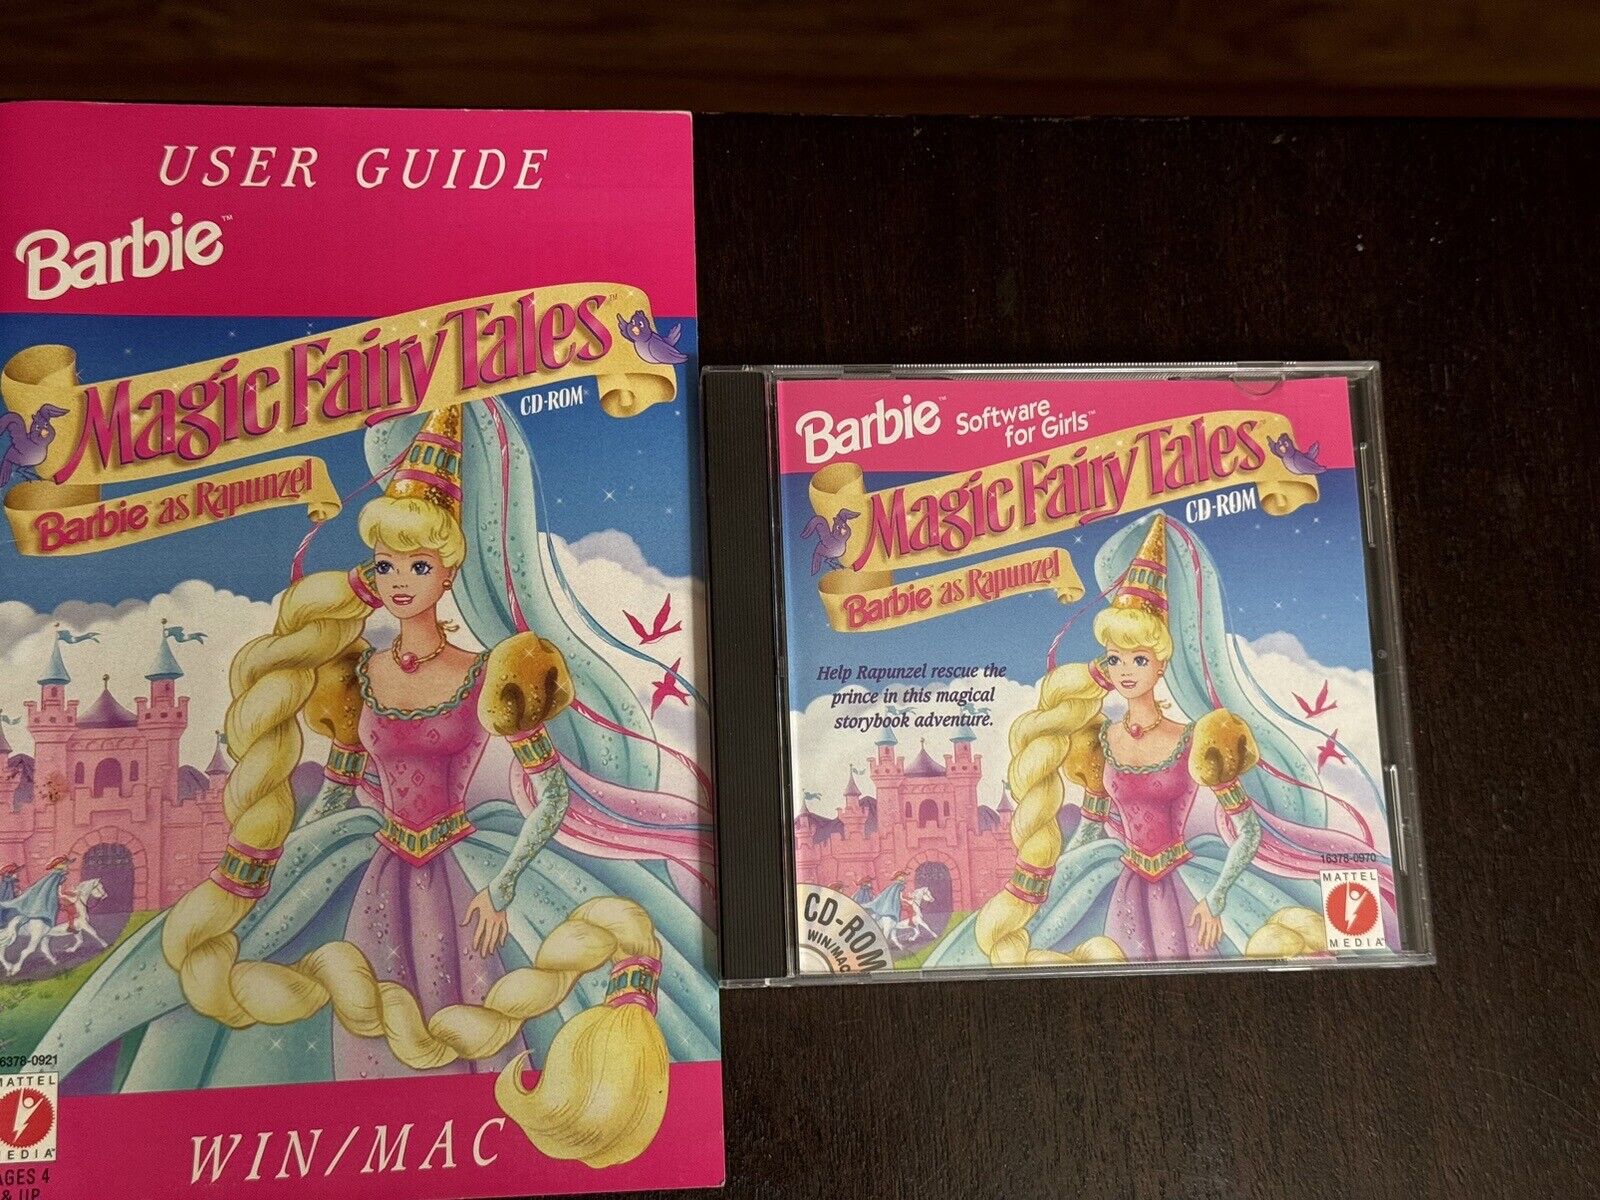 Barbie Software For Girls Magic Fairy Tales Barbie As Rapunzel